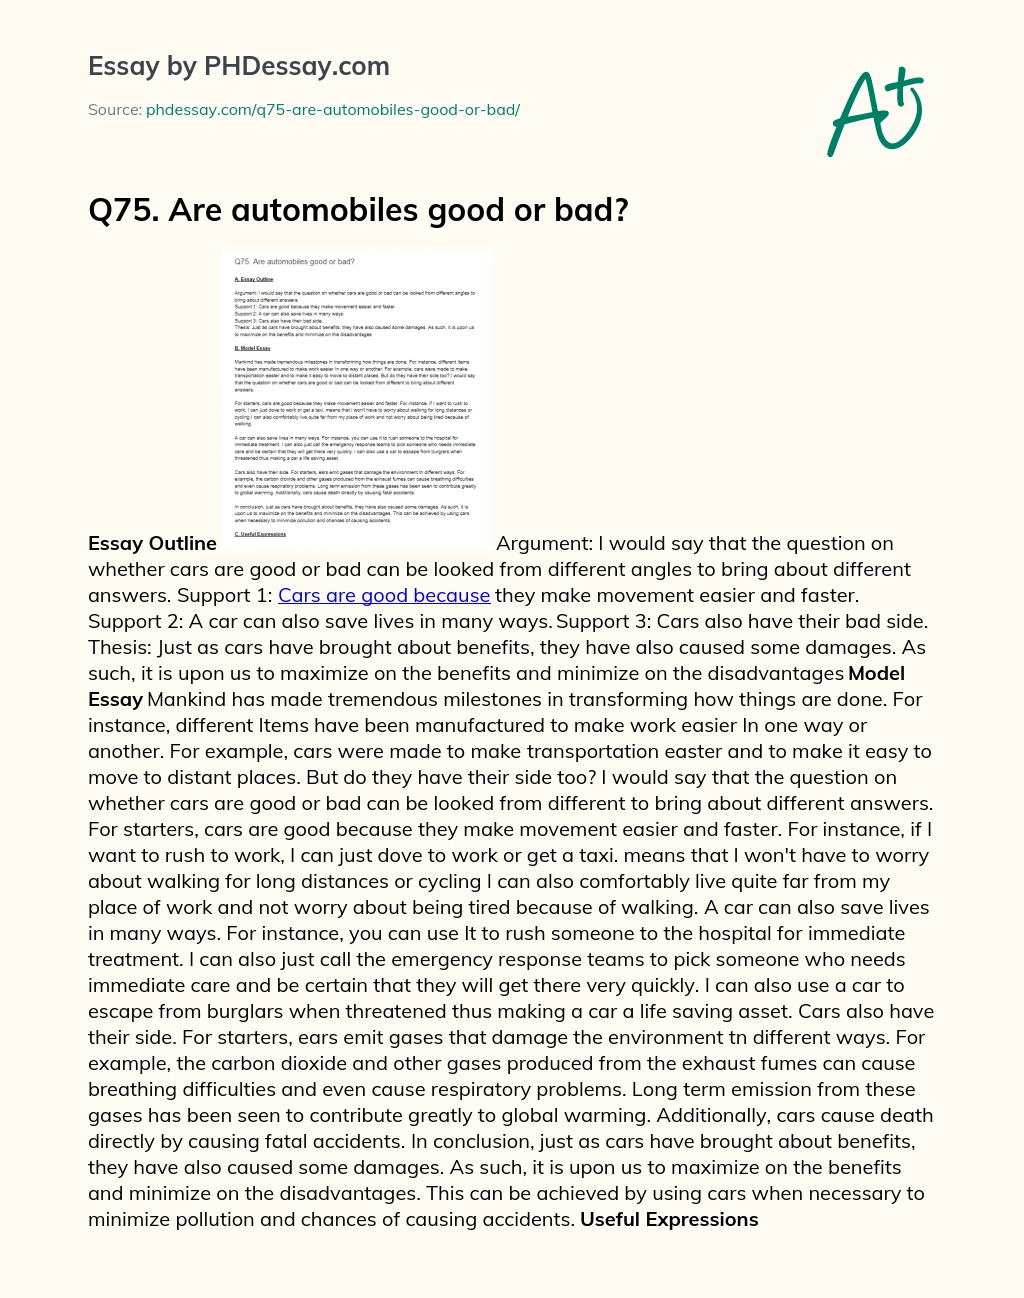 Q75. Are automobiles good or bad? essay